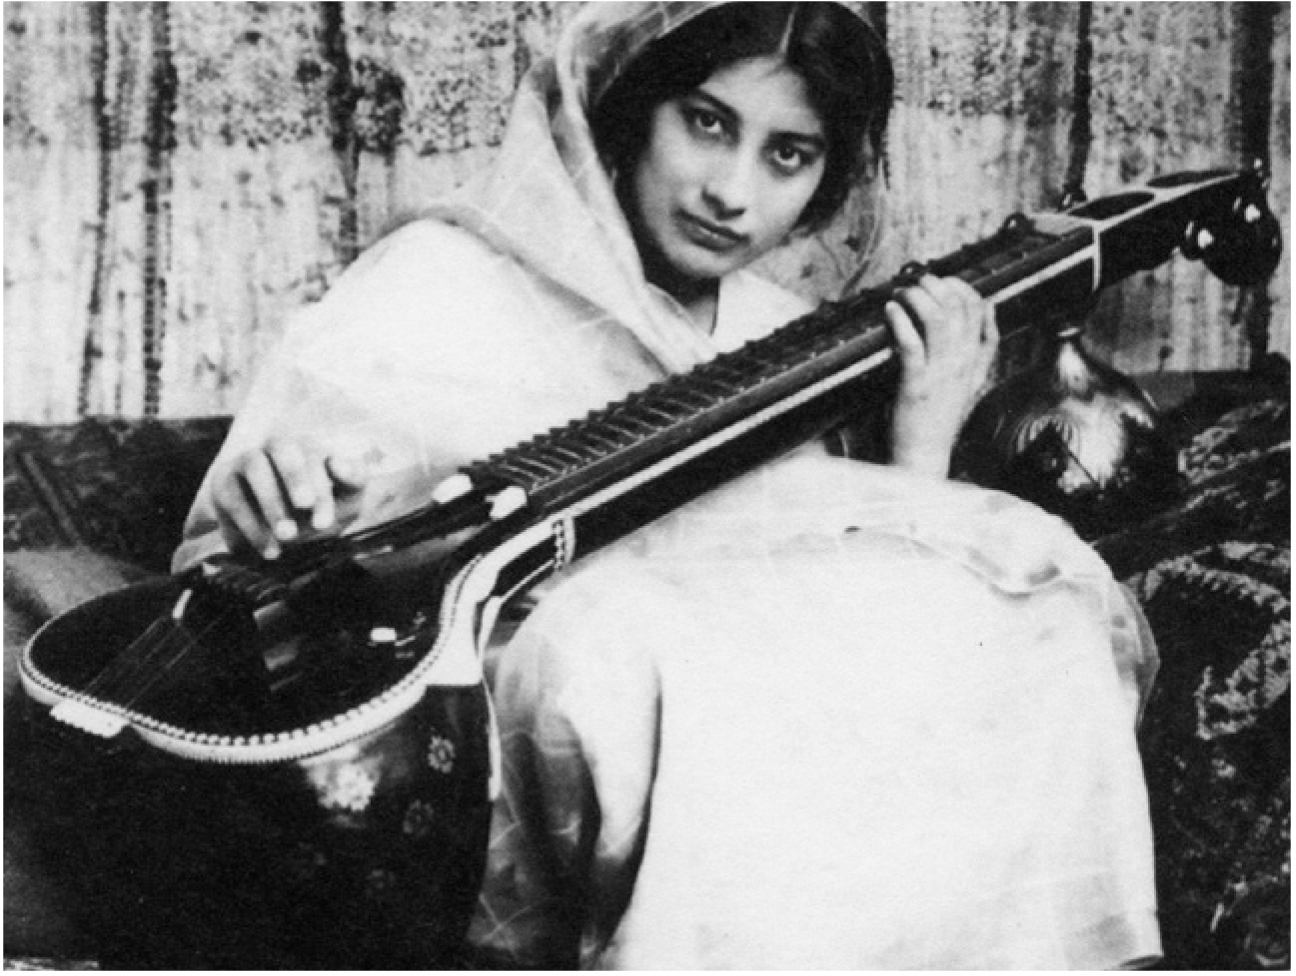 NOOR INAYAT KHAN Sufi princess spy playing the vina a stringed instrument - photo 2